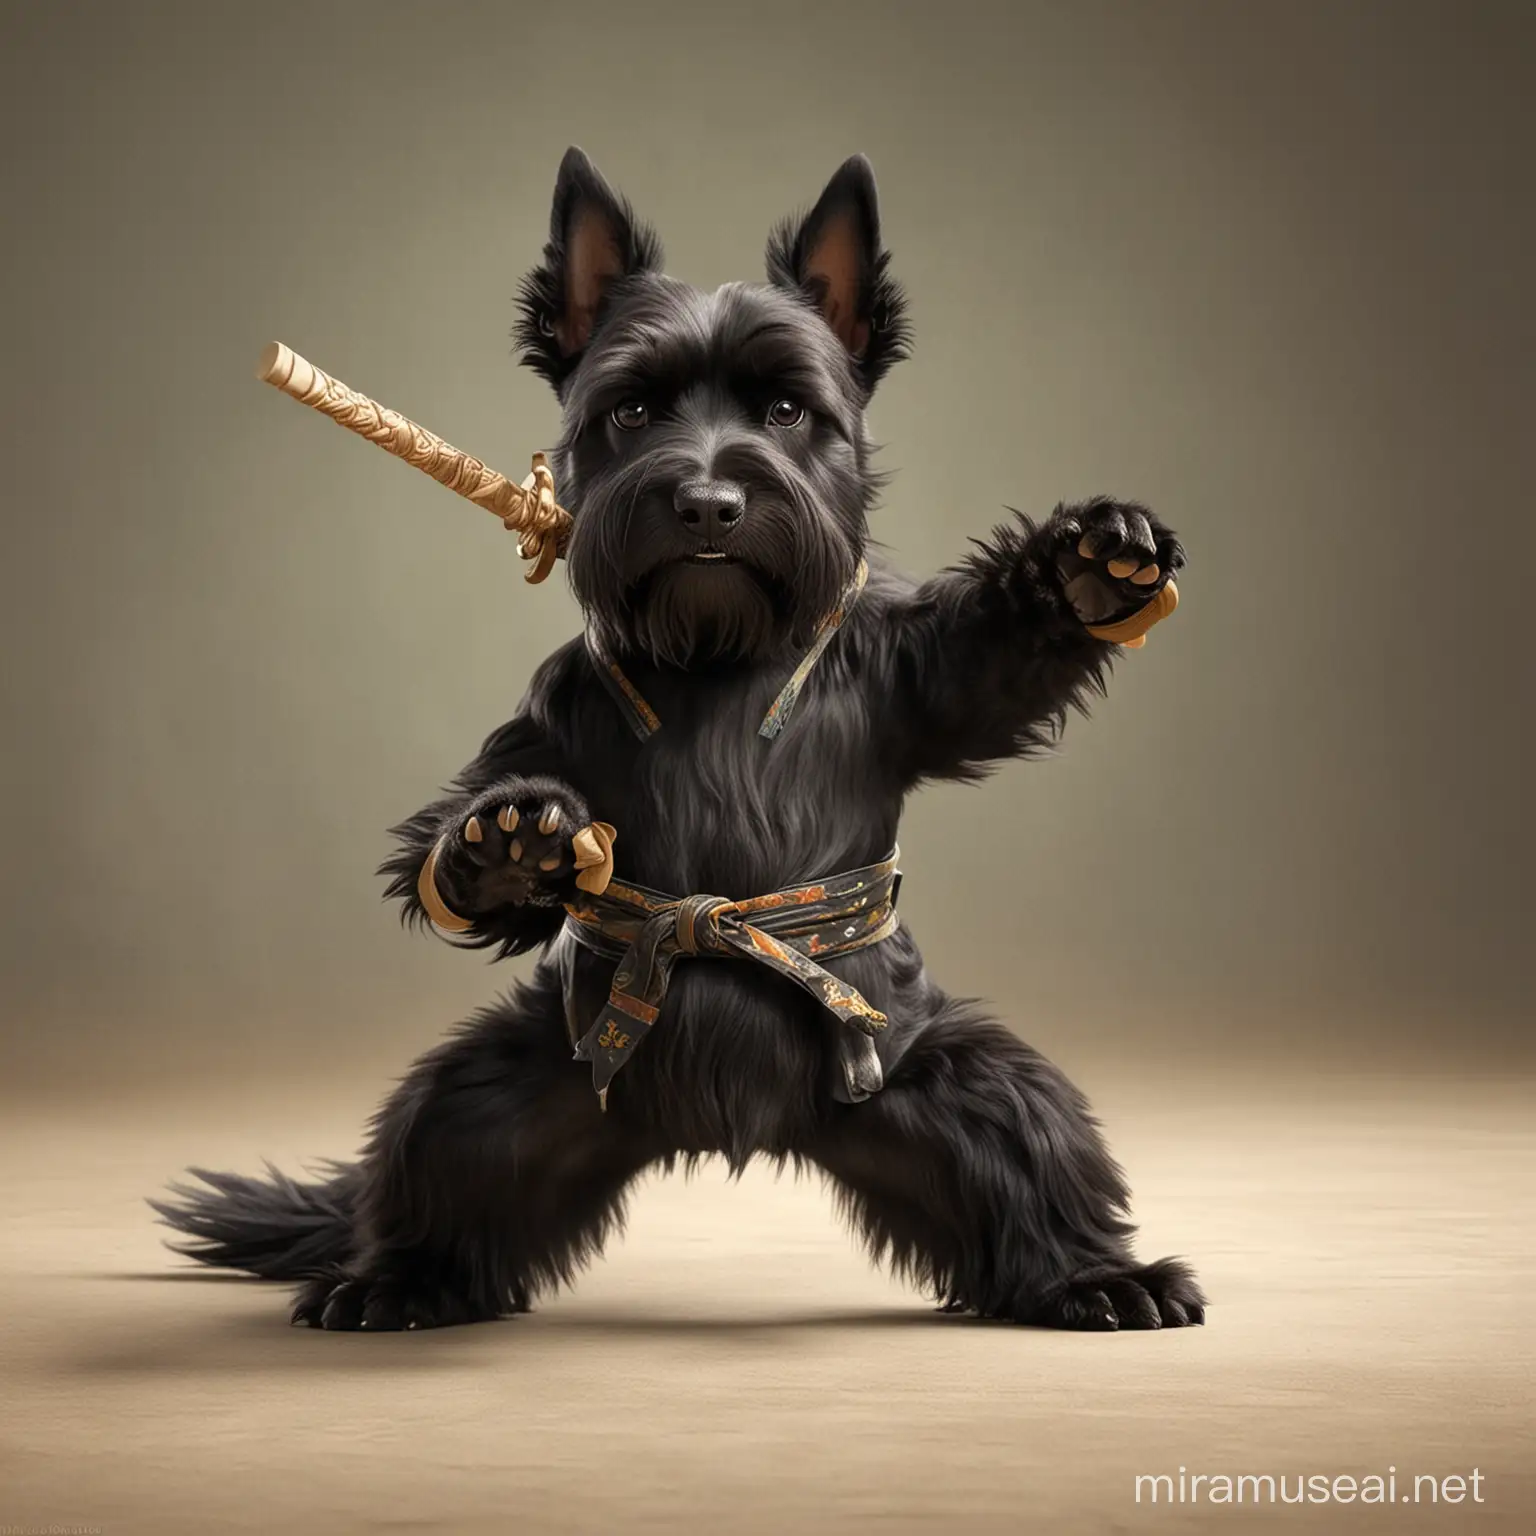 black scottish terrier in kung fu panda style
